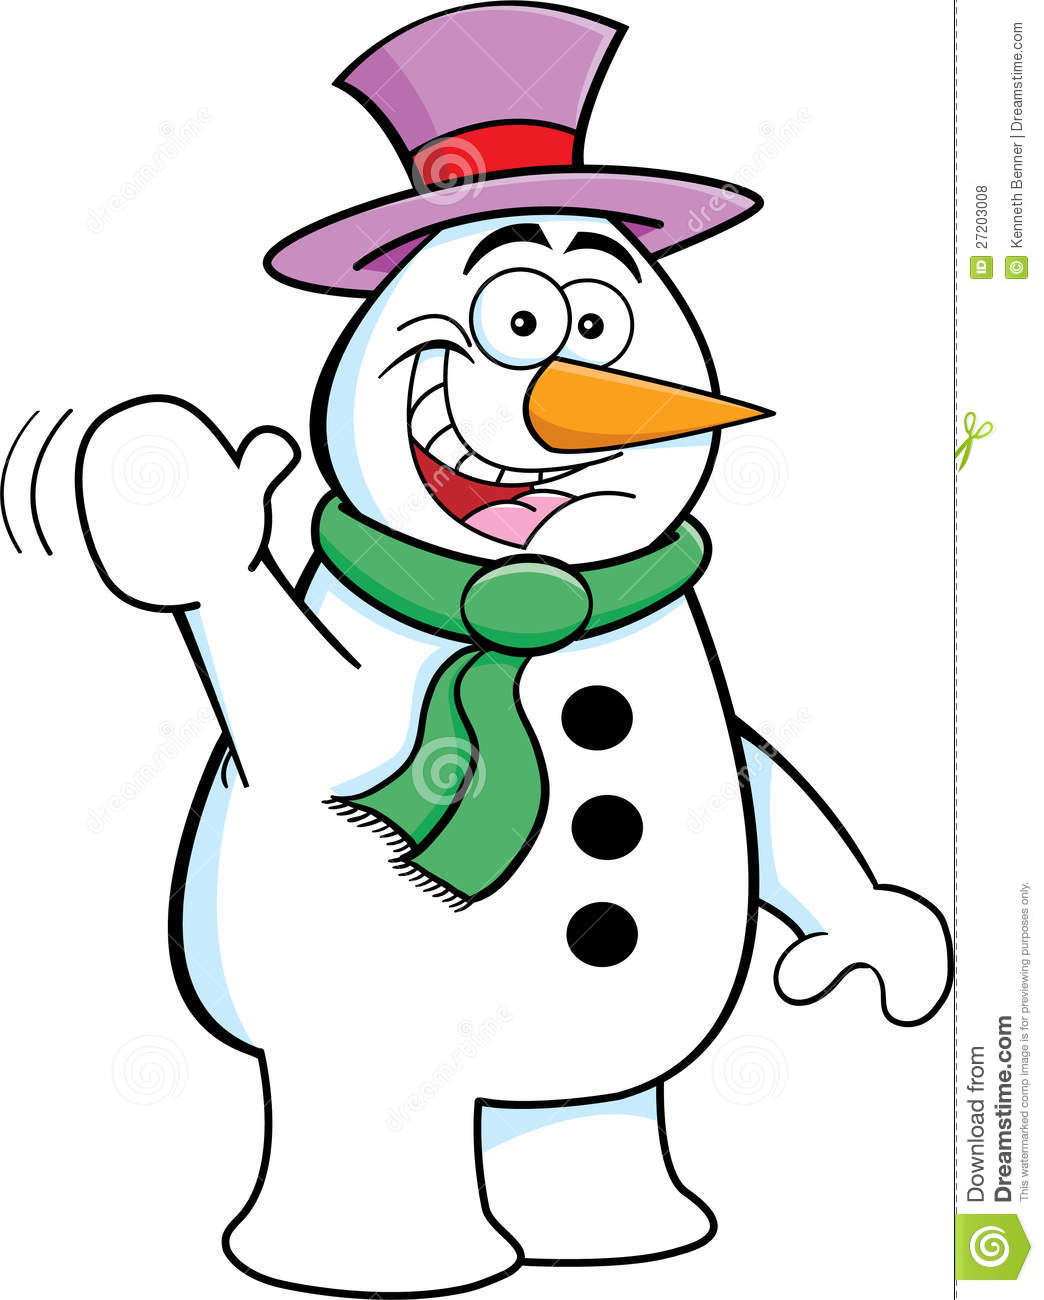 Cartoon Waving Snowman Royalty Free Stock Photos   Image  27203008